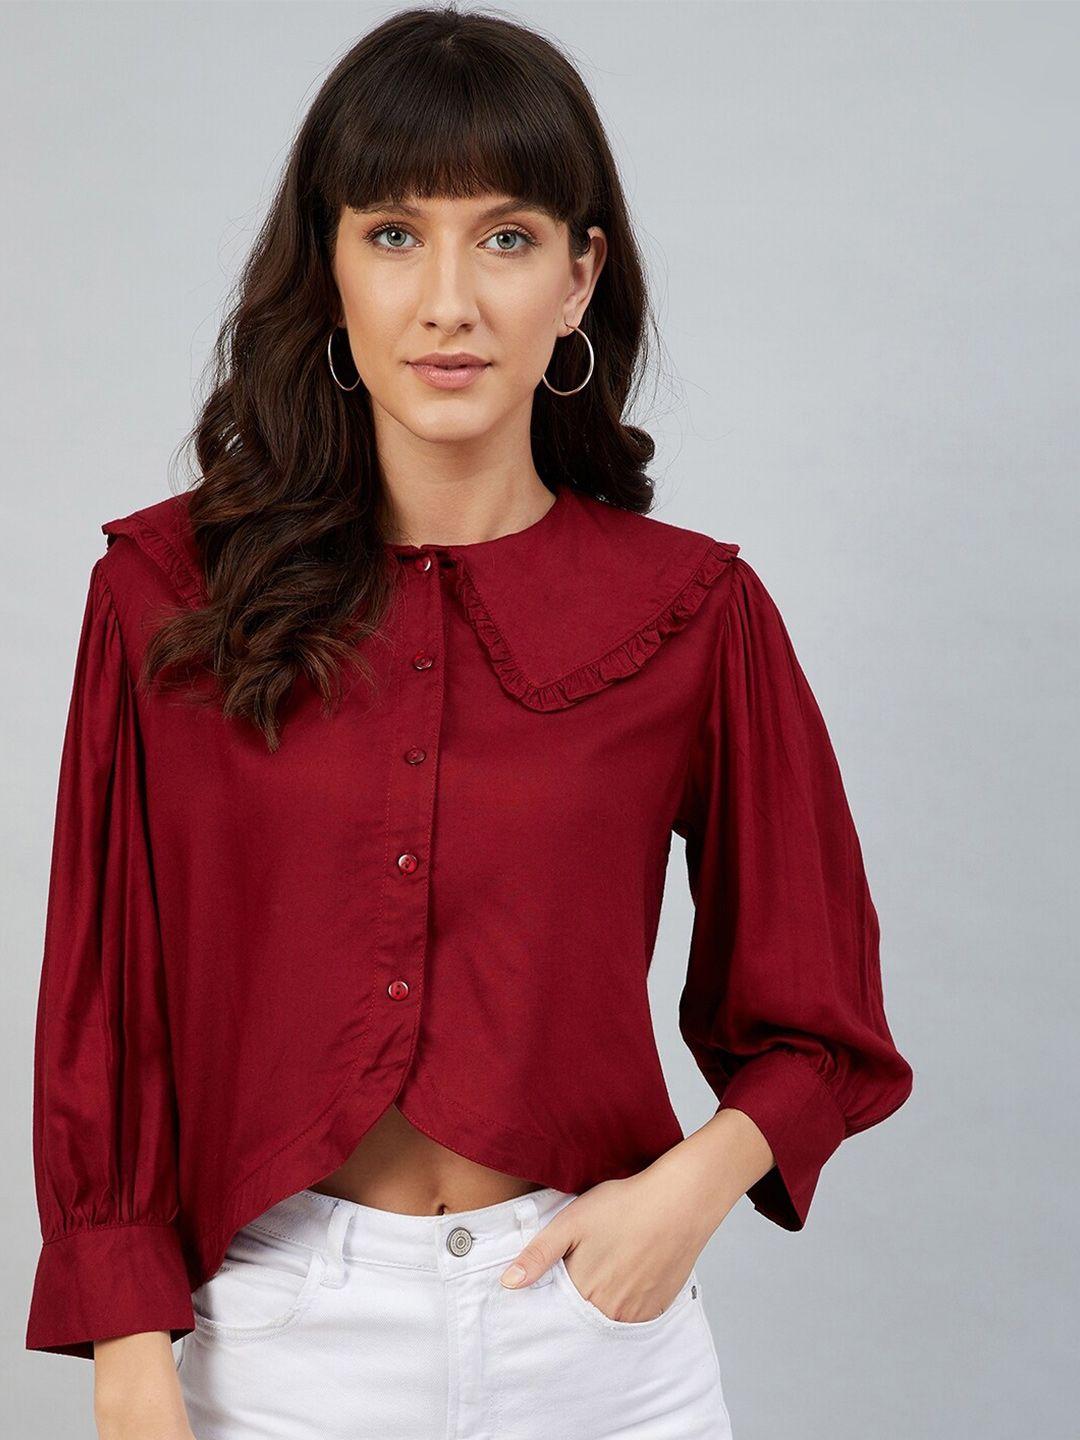 carlton-london-women-maroon-shirt-style-top